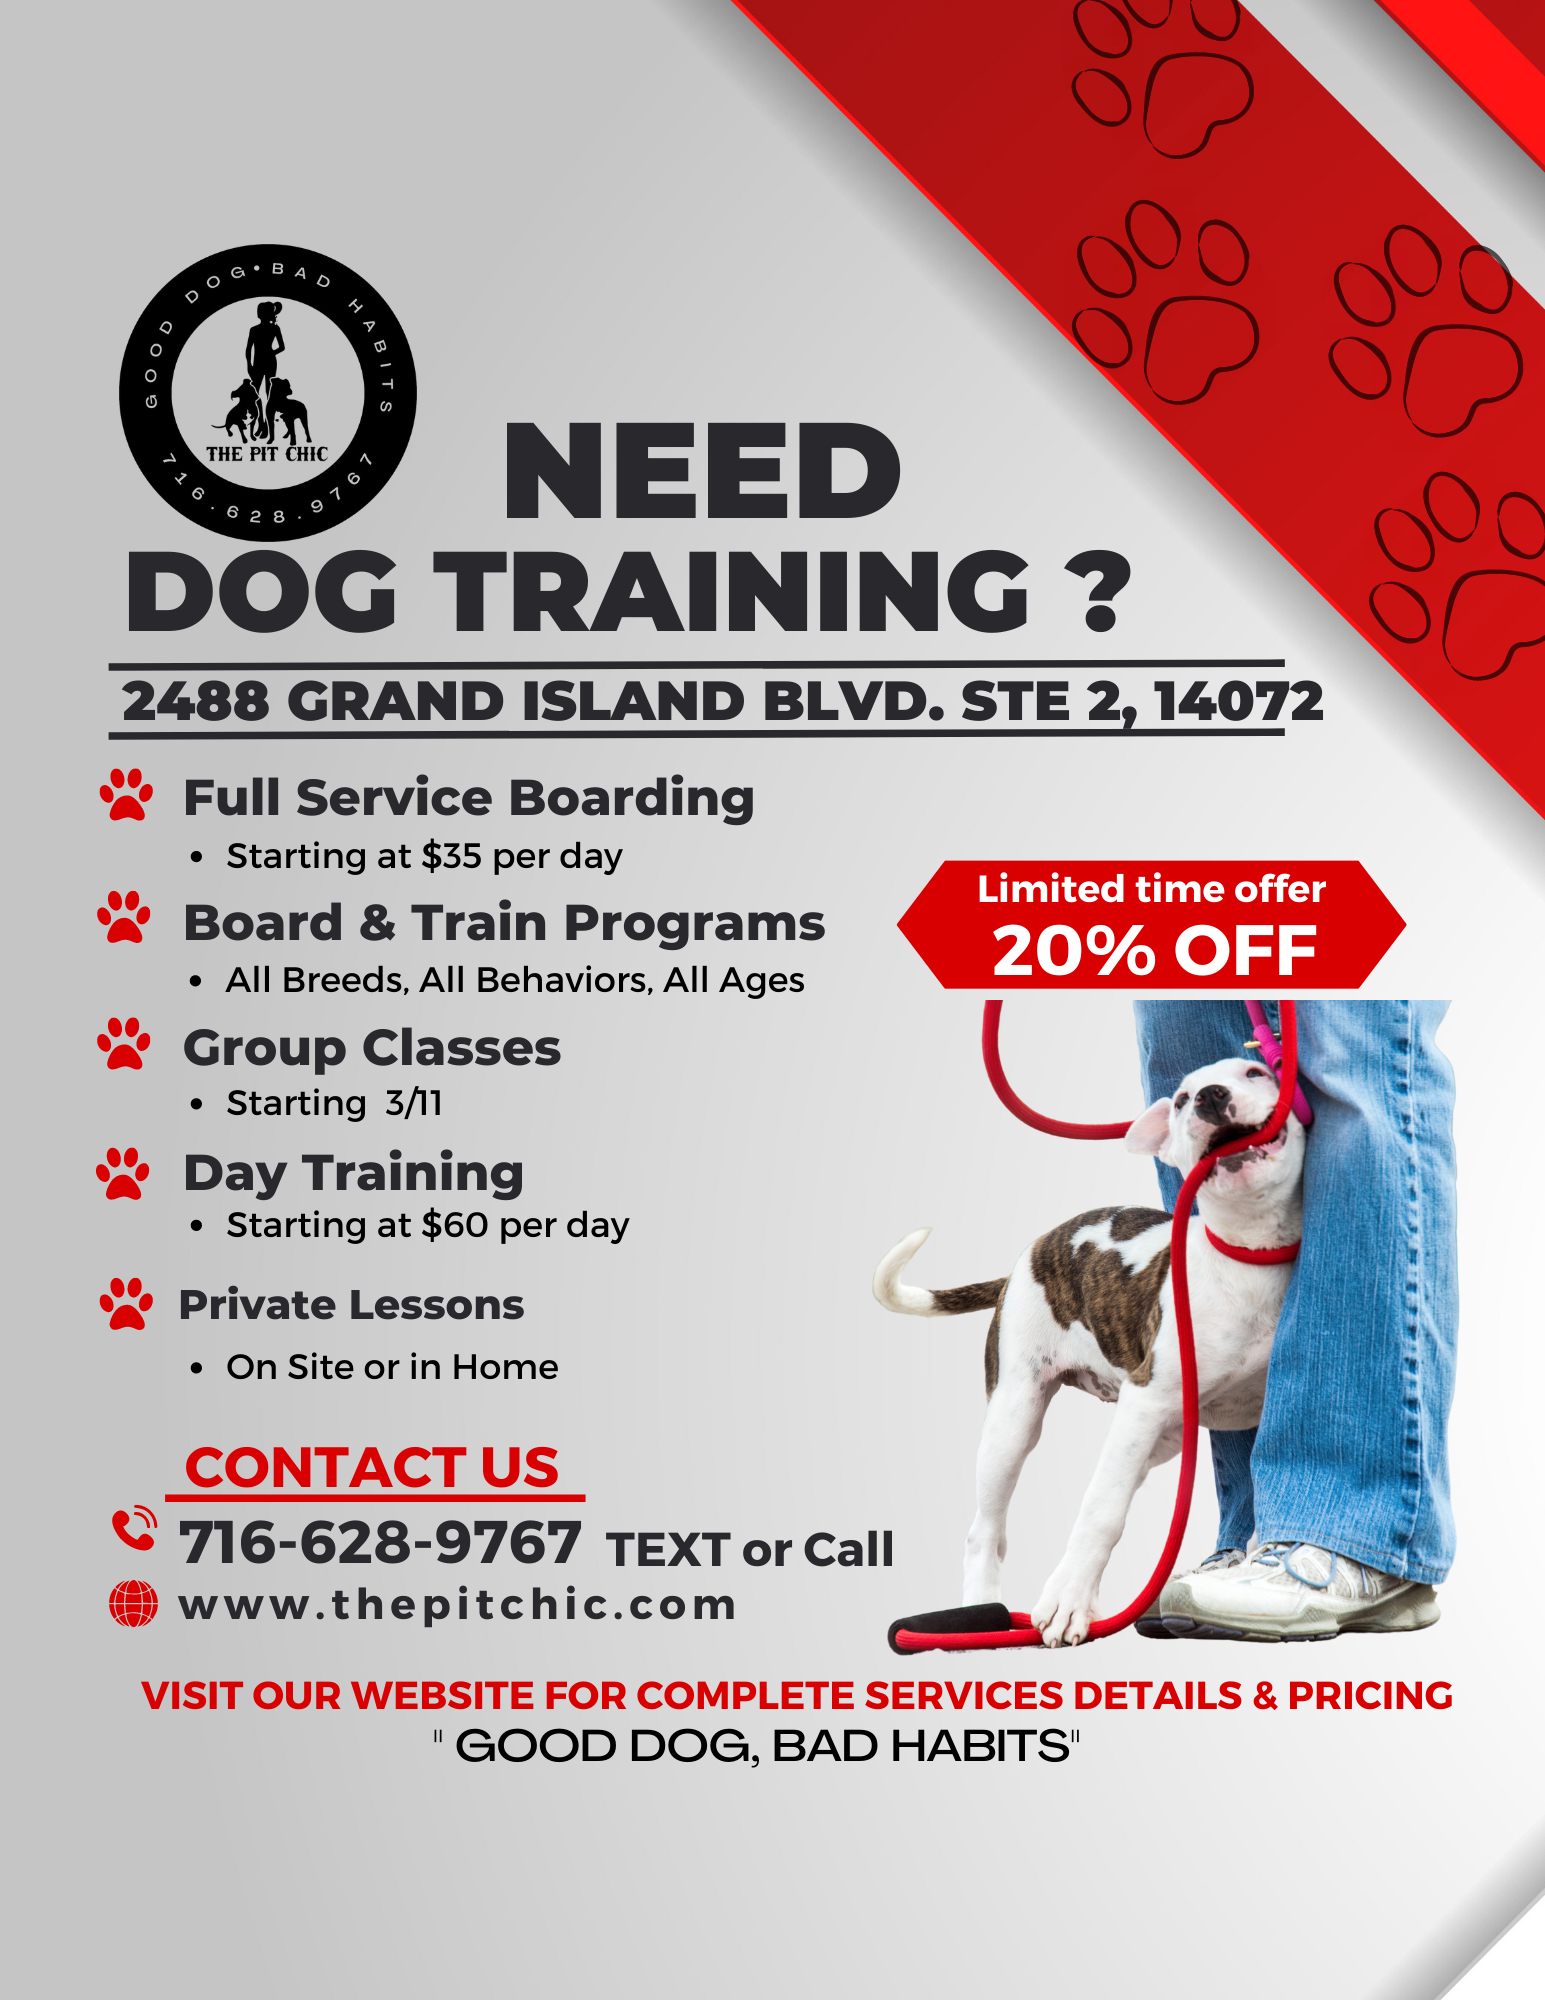 THE PIT CHIC Training , Boarding & Municipal Shelter 2488 Grand Island Blvd Suite 2, Grand Island New York 14072